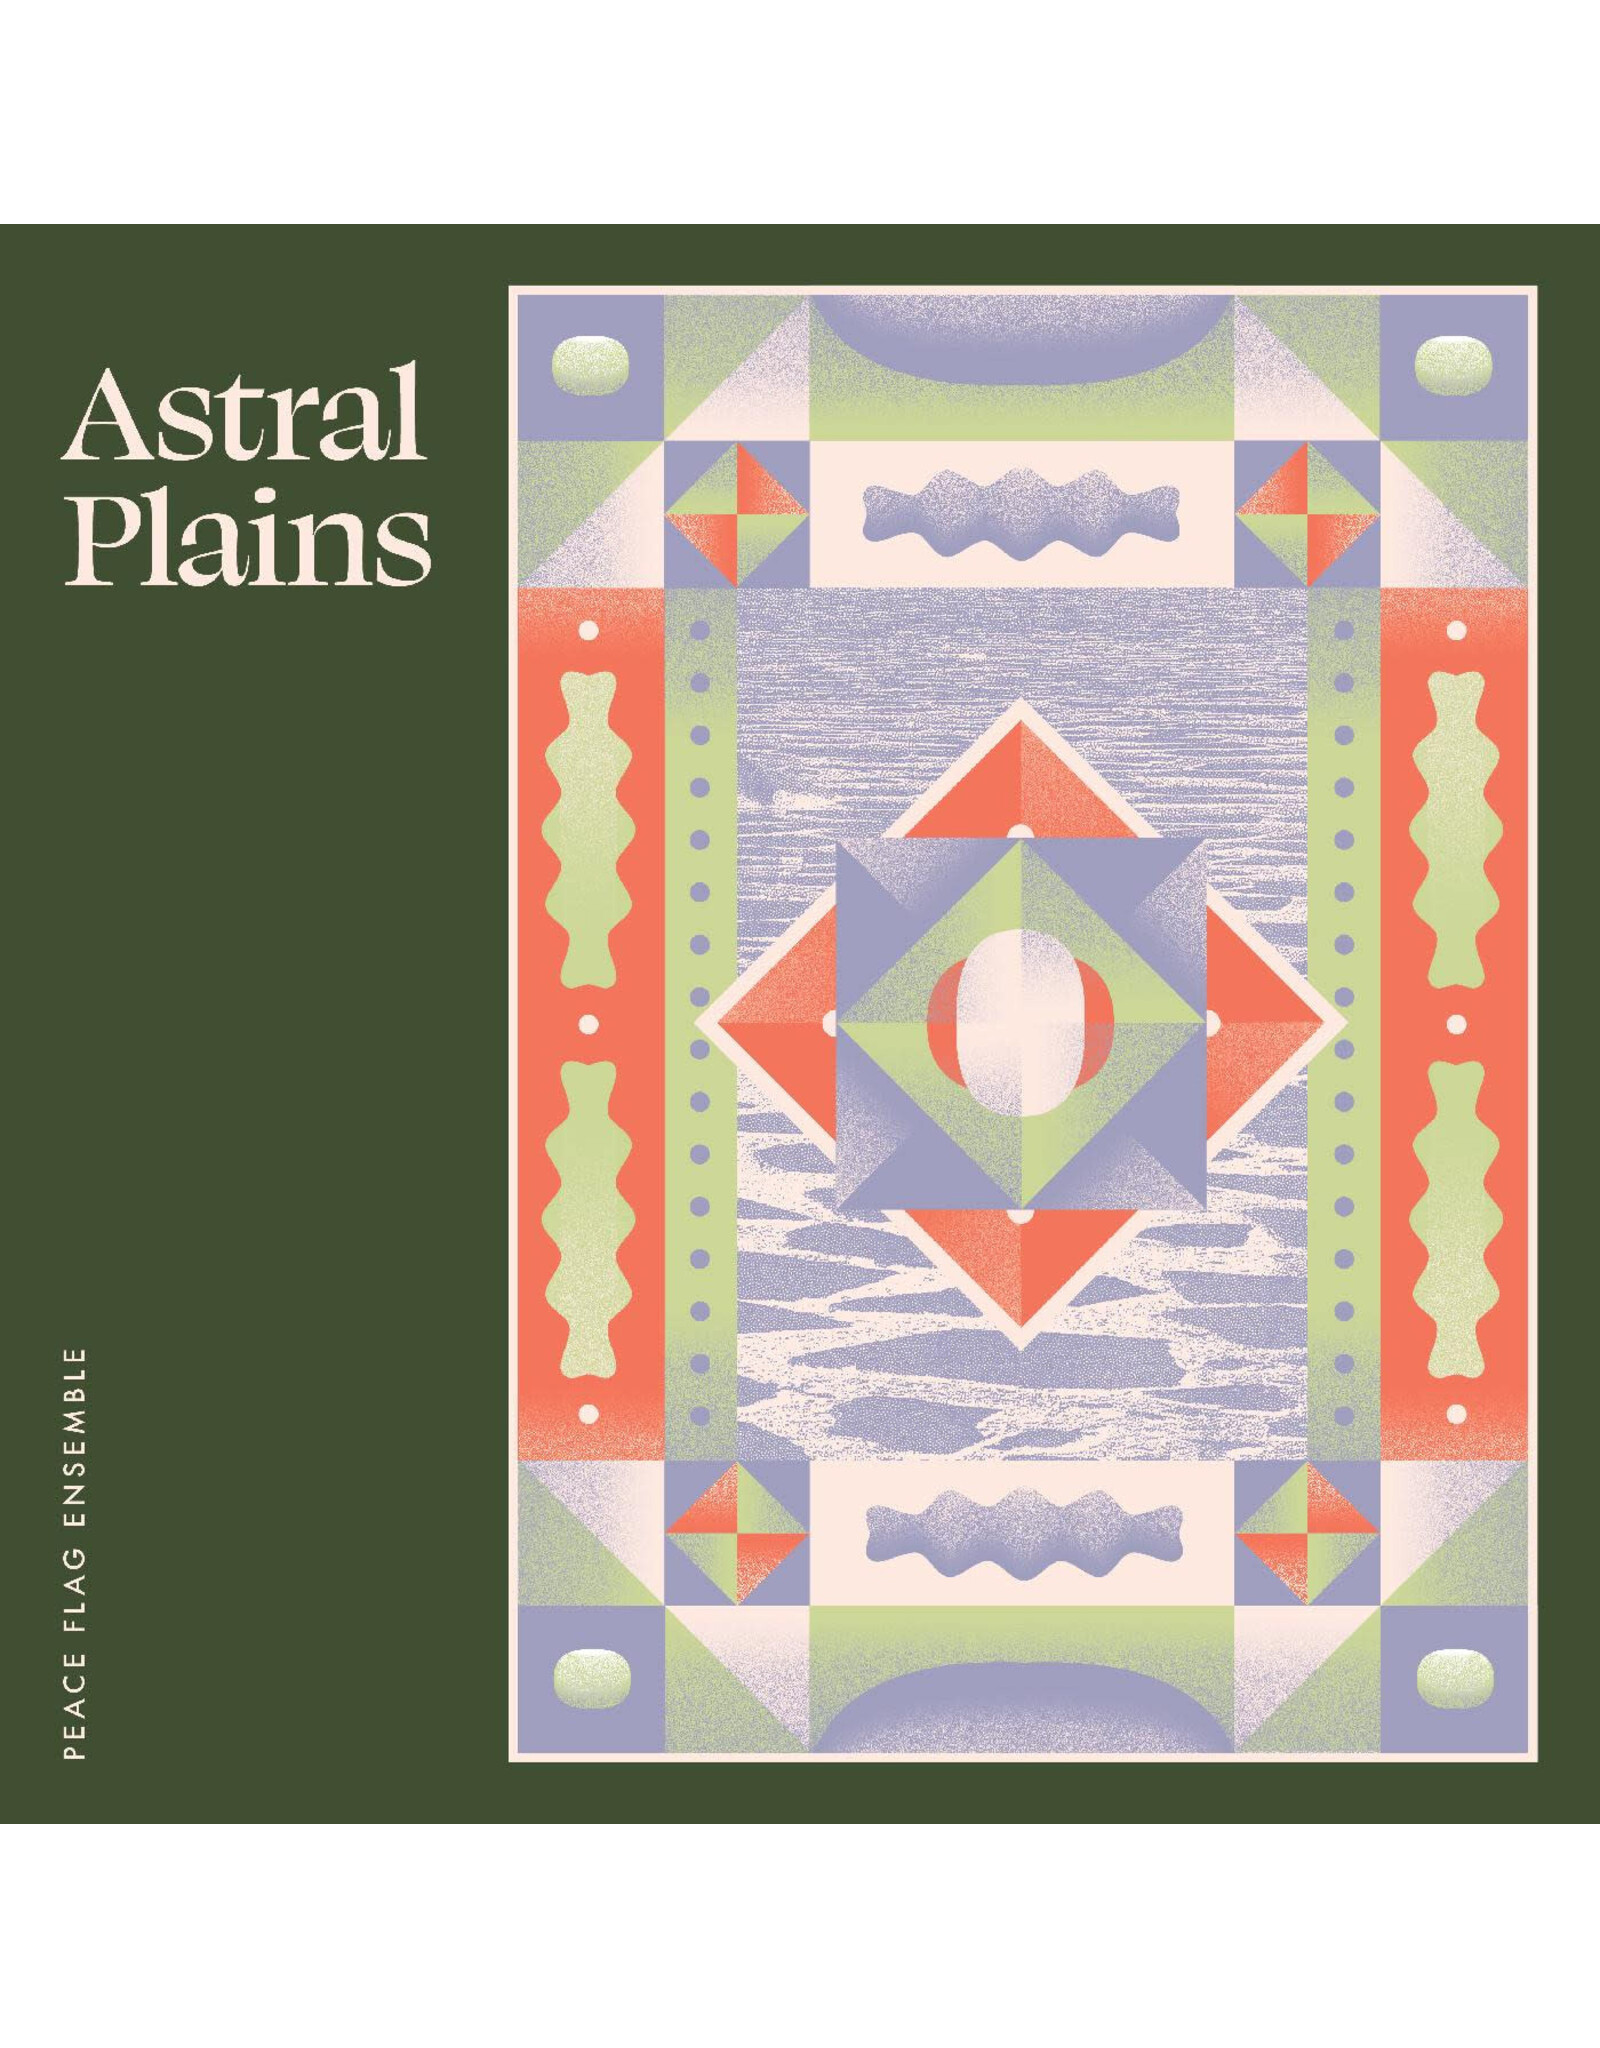 We Are Busy Bodies Peace Flag Ensemble: Astral Plains LP